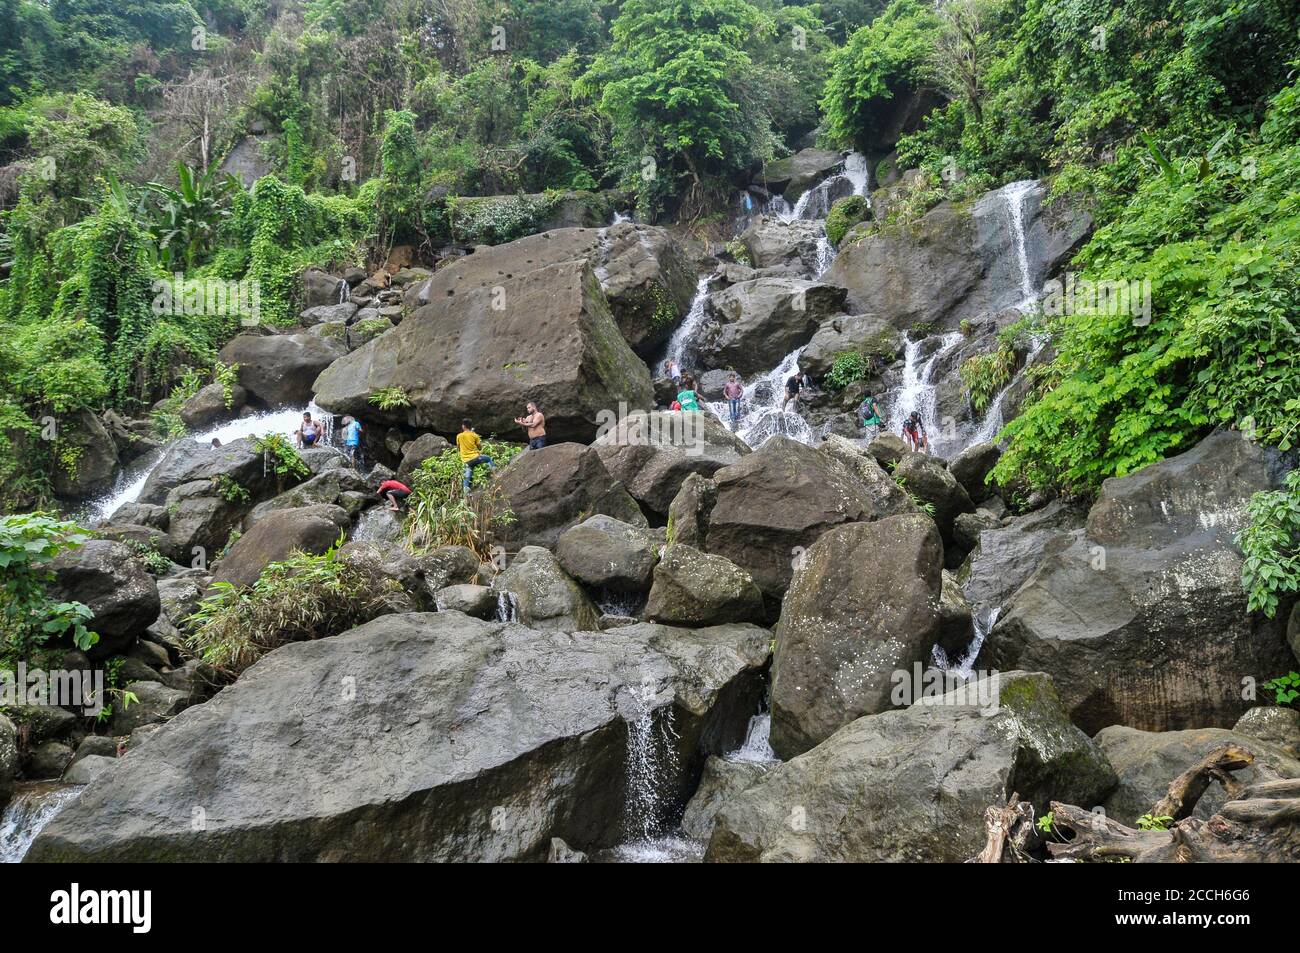 Tourists enjoying the hilly 'Mayabi Jhorna' waterfalls located at the Jaflong in Sylhet during the coronavirus pandemic. Sylhet, Bangladesh. Stock Photo